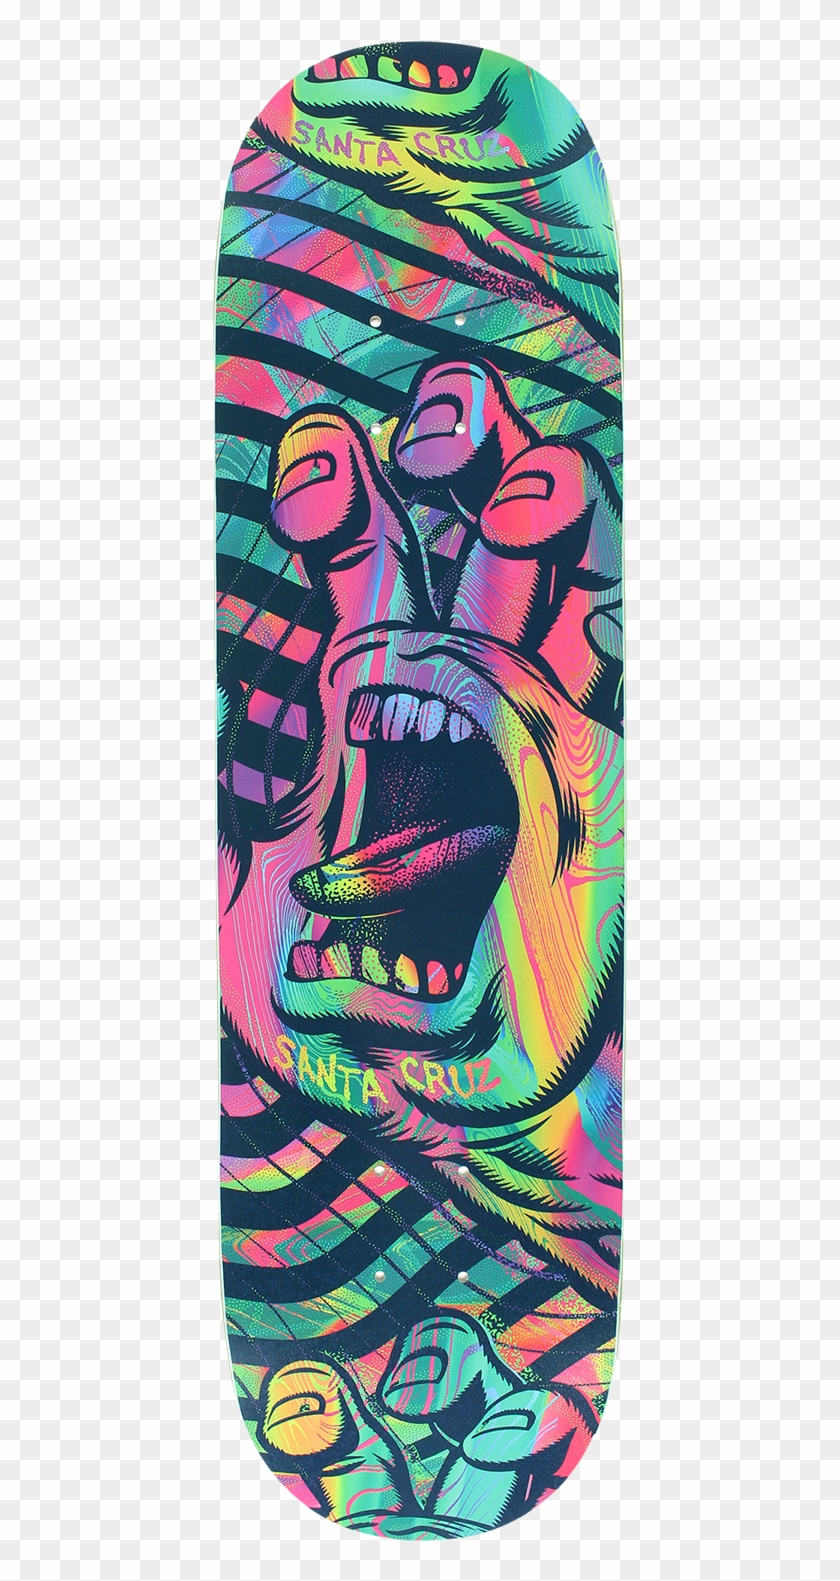 Santa Cruz Skateboards - Santa Cruz Everslick Acid Clipart #4315217